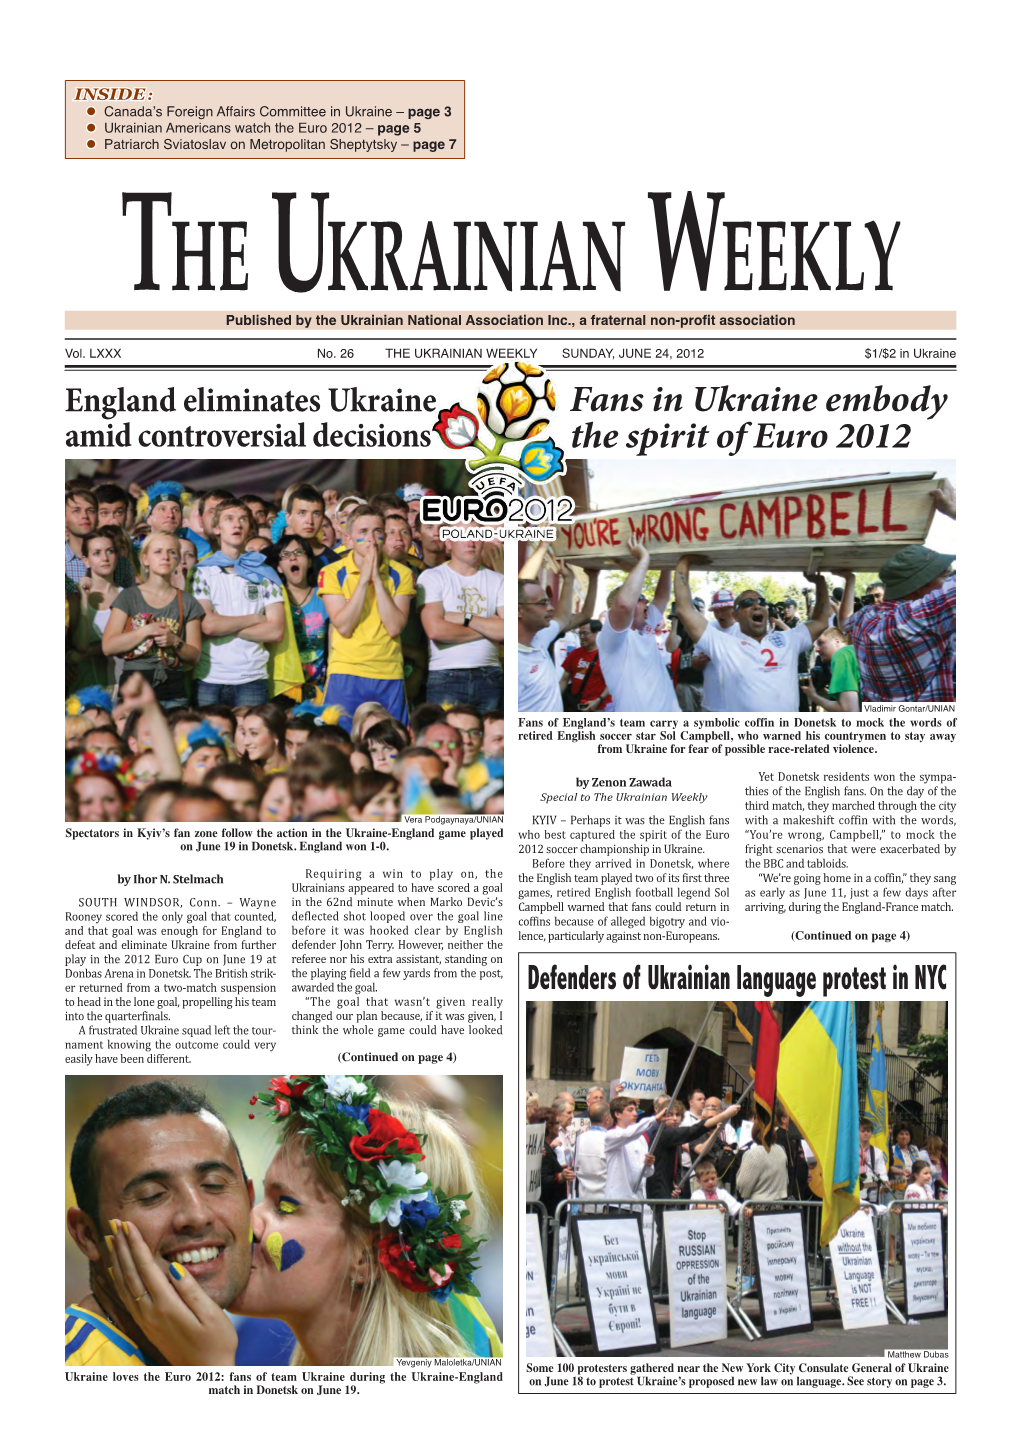 Fans in Ukraine Embody the Spirit of Euro 2012